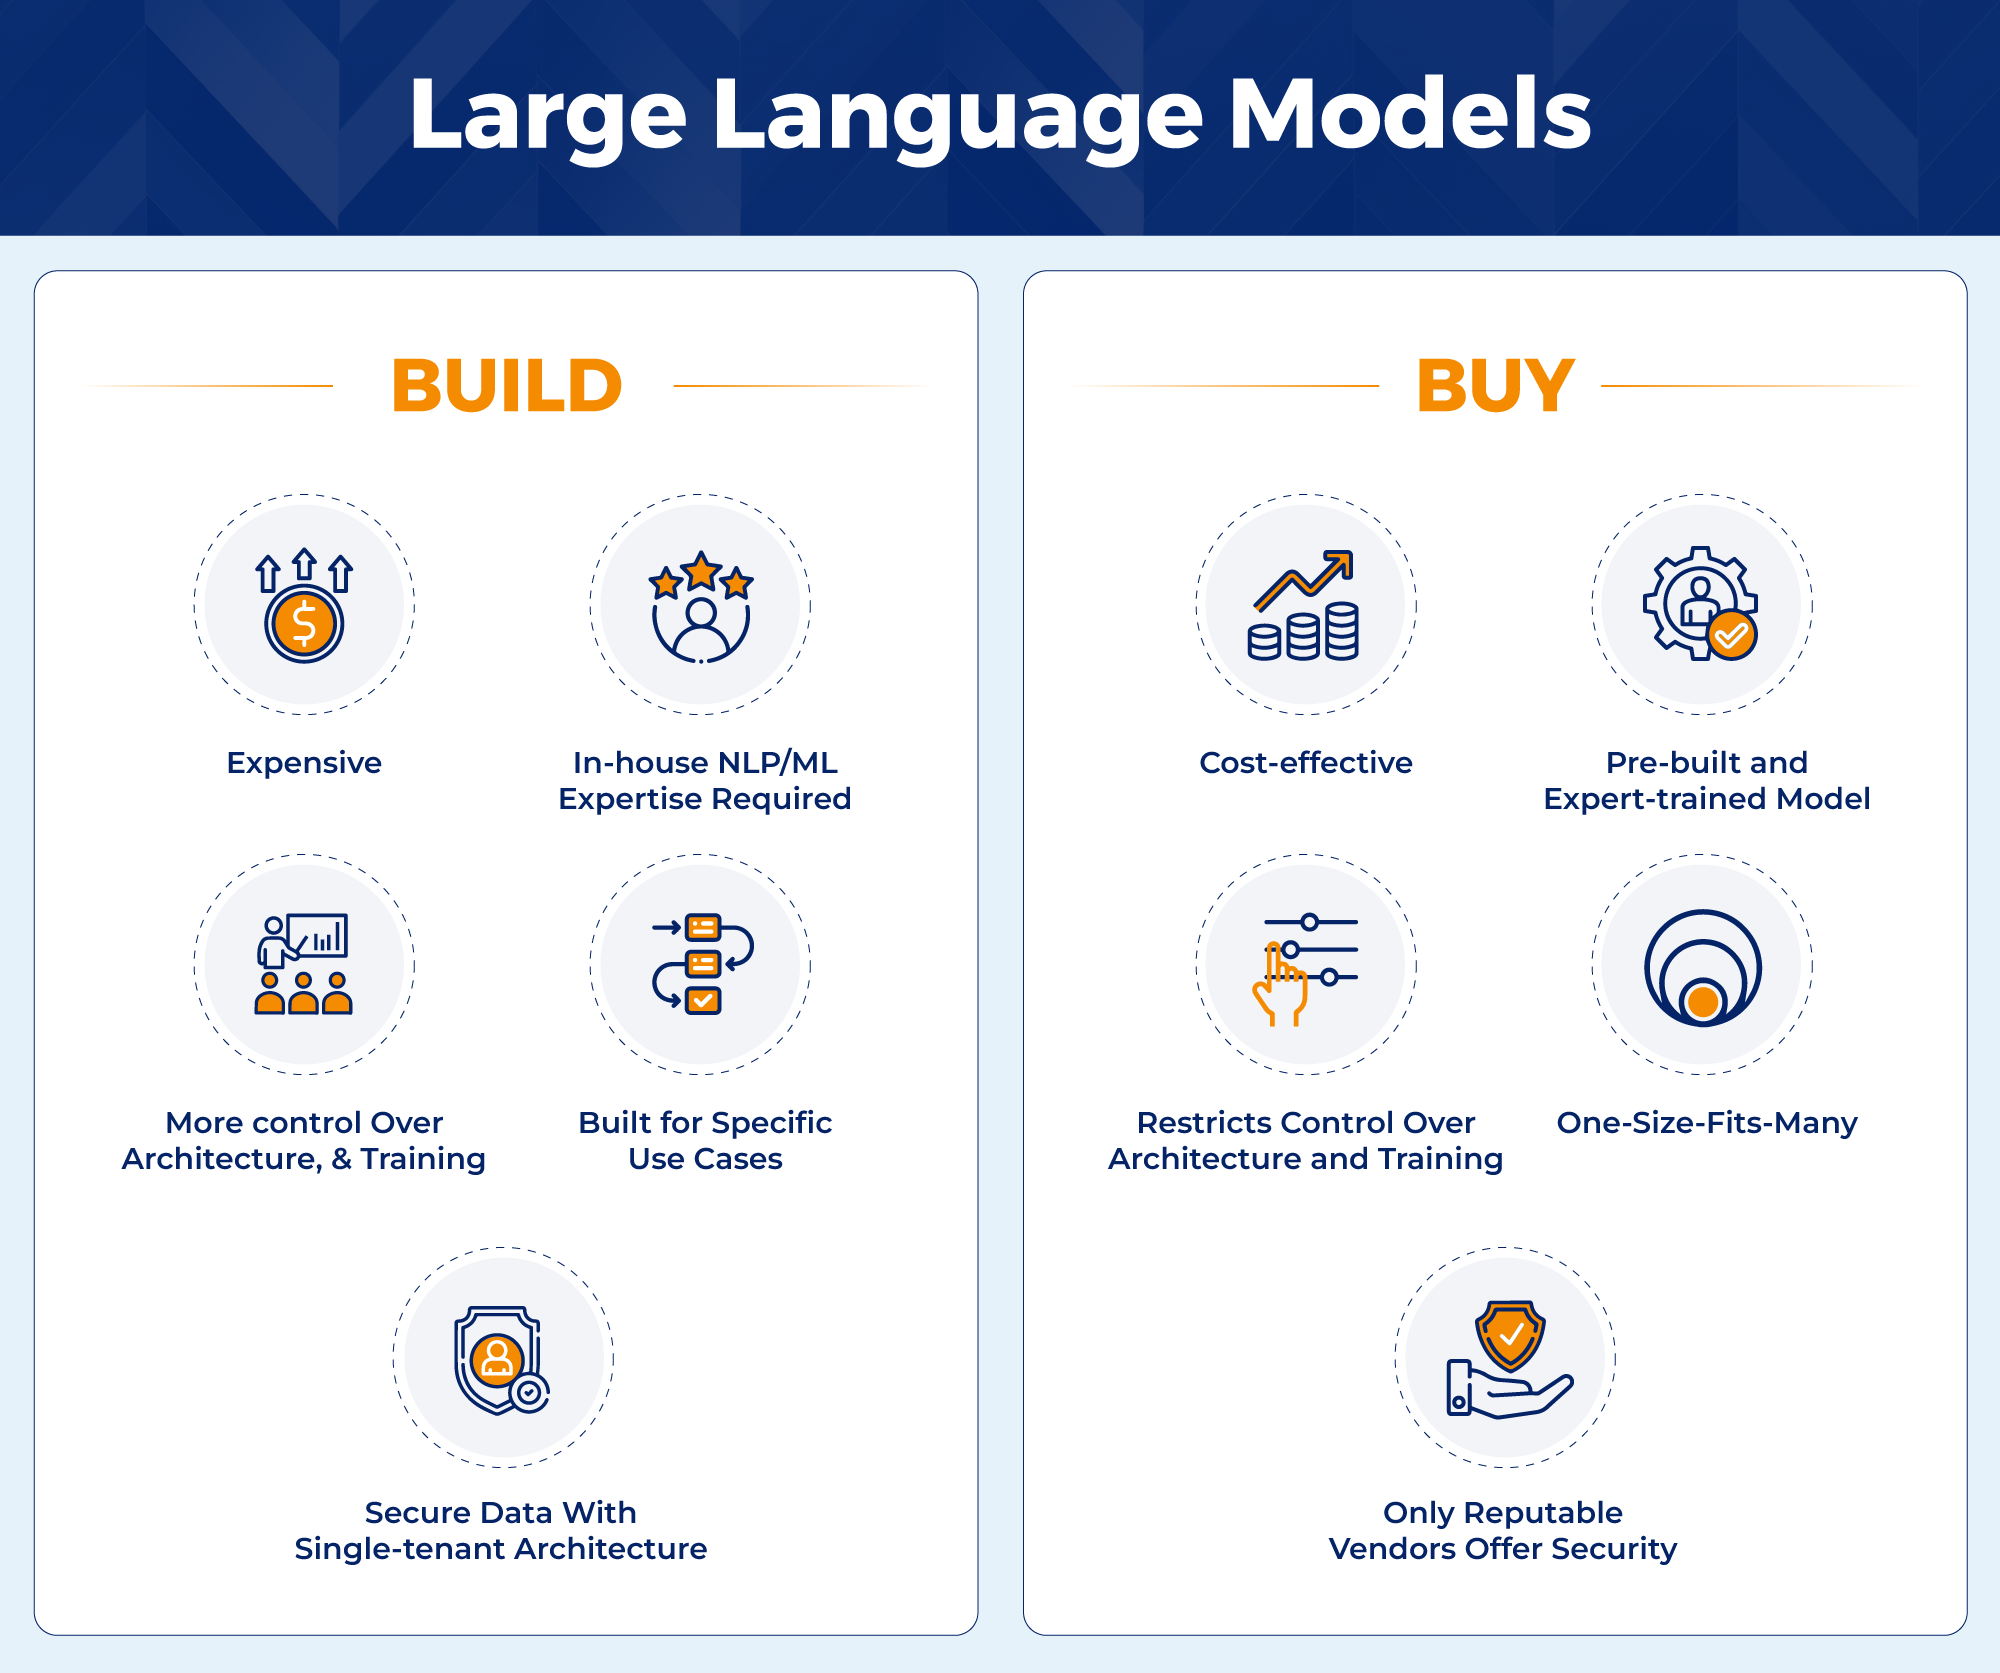 Large Language Models (LLMs) - buy or build